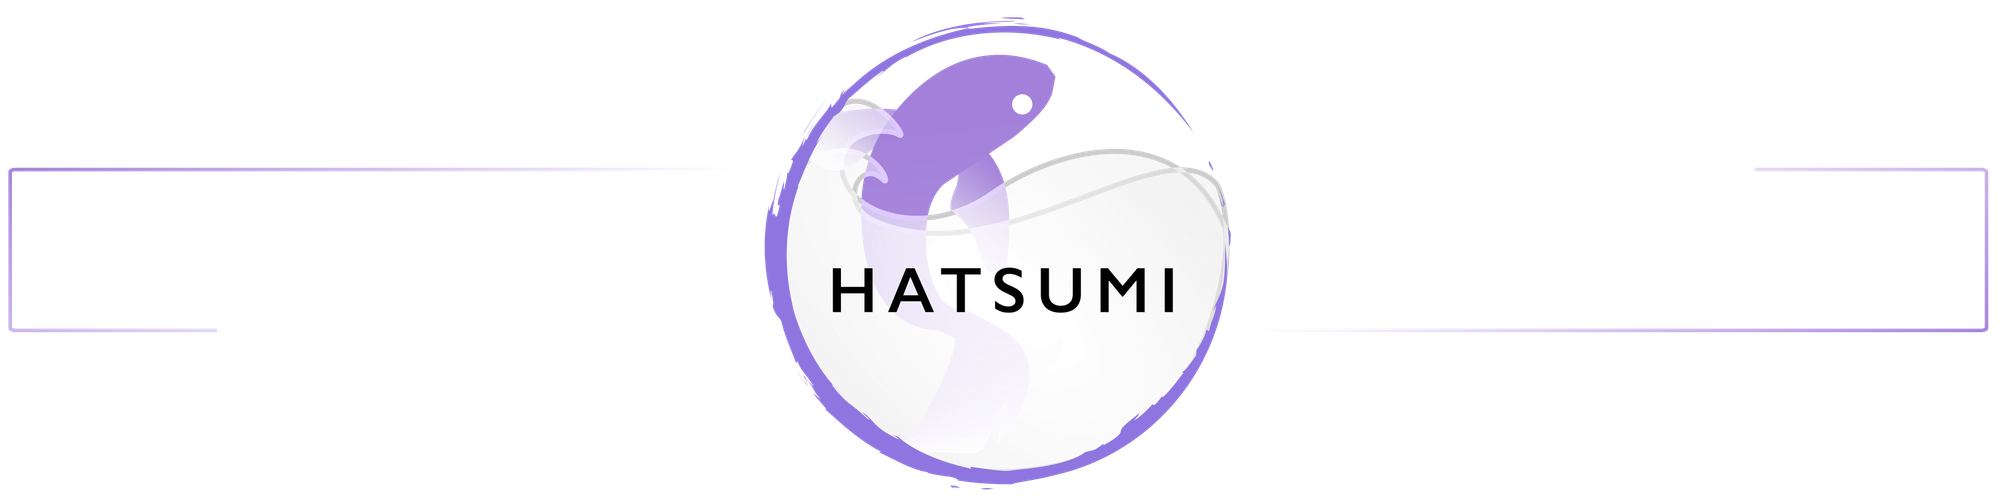 Hatsumi